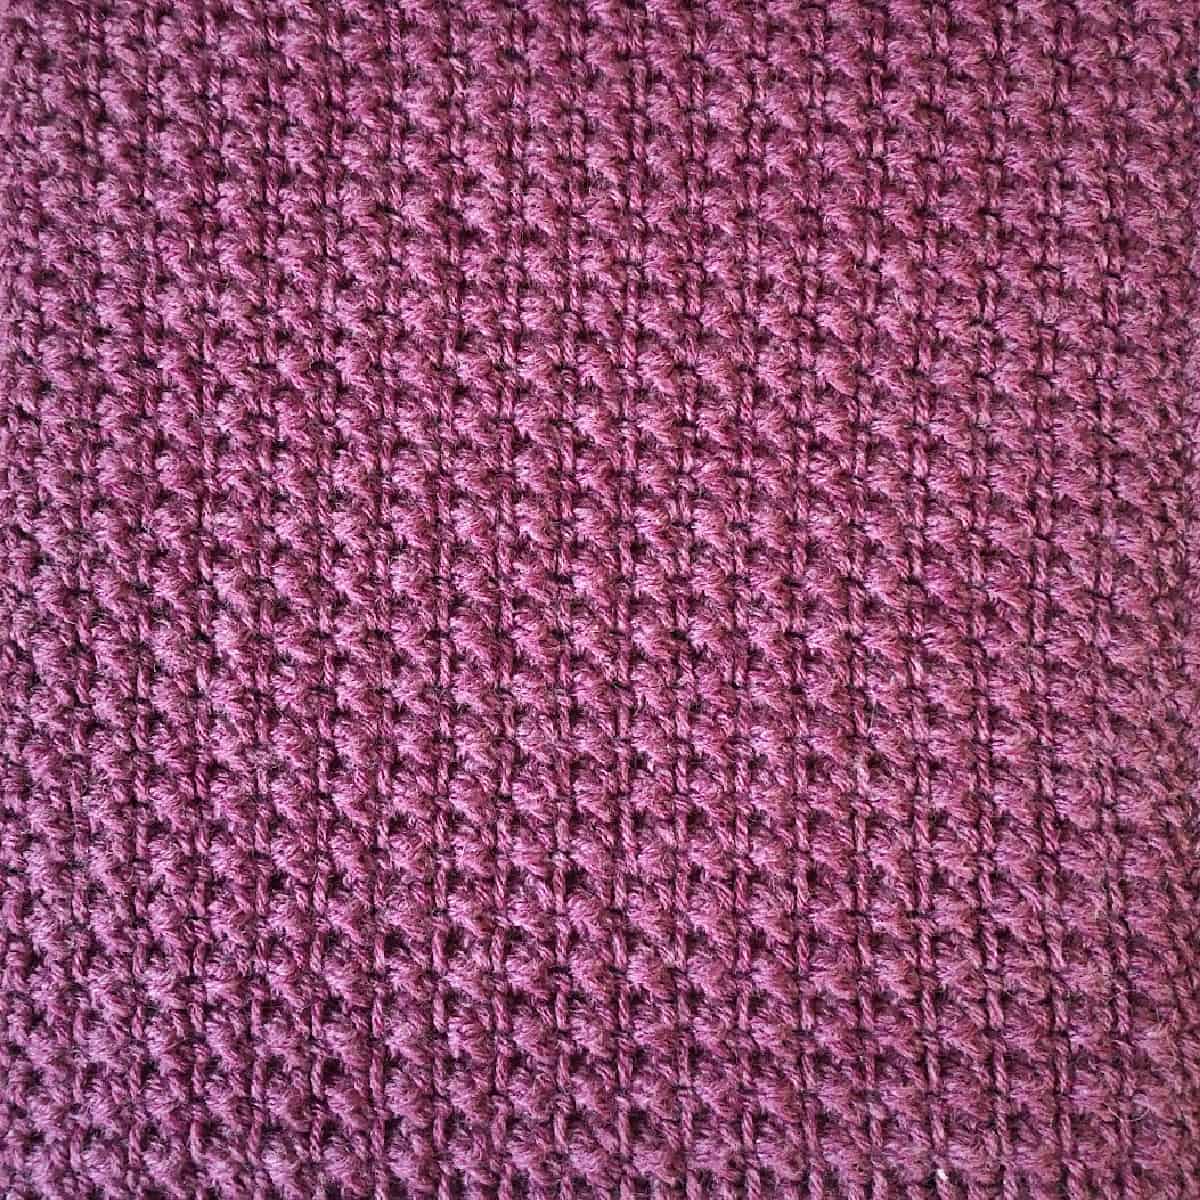 Dark pink purply blanket square in textured single crochet.